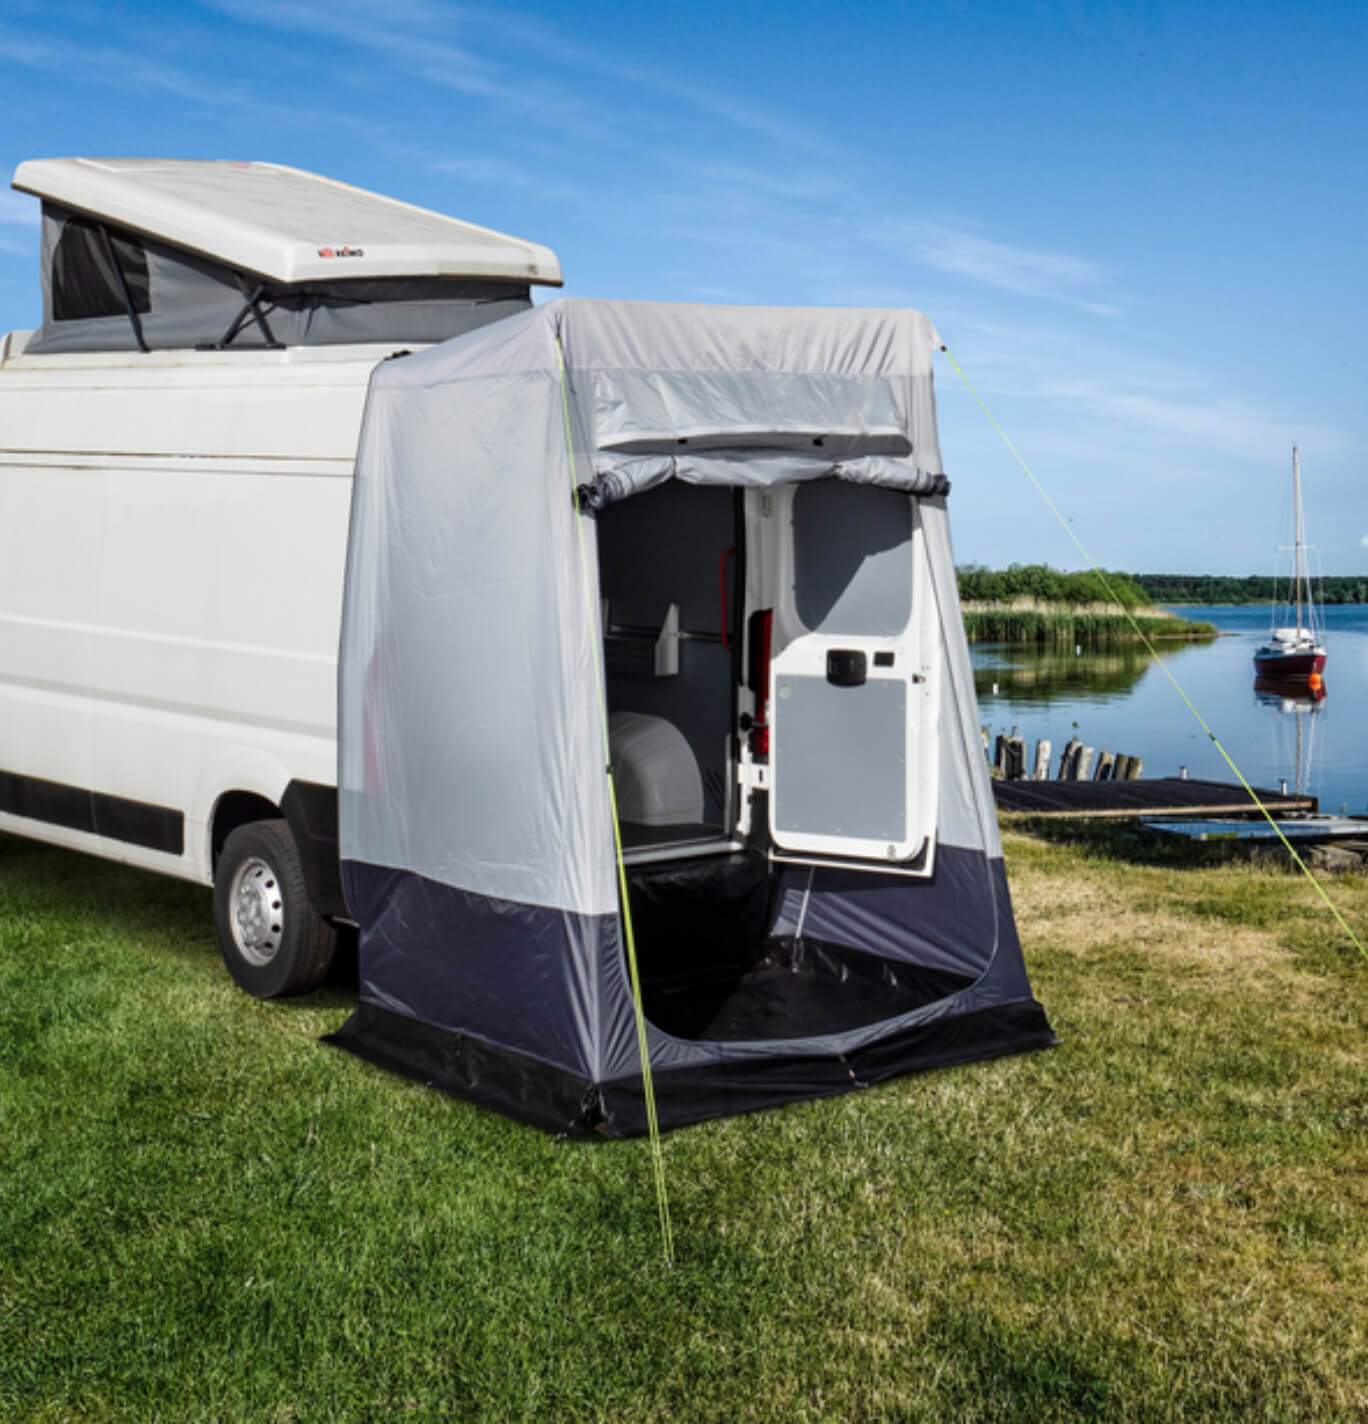 Reimo Ducatissimo Premium Rear Tent for Fiat Ducato Campervans Image